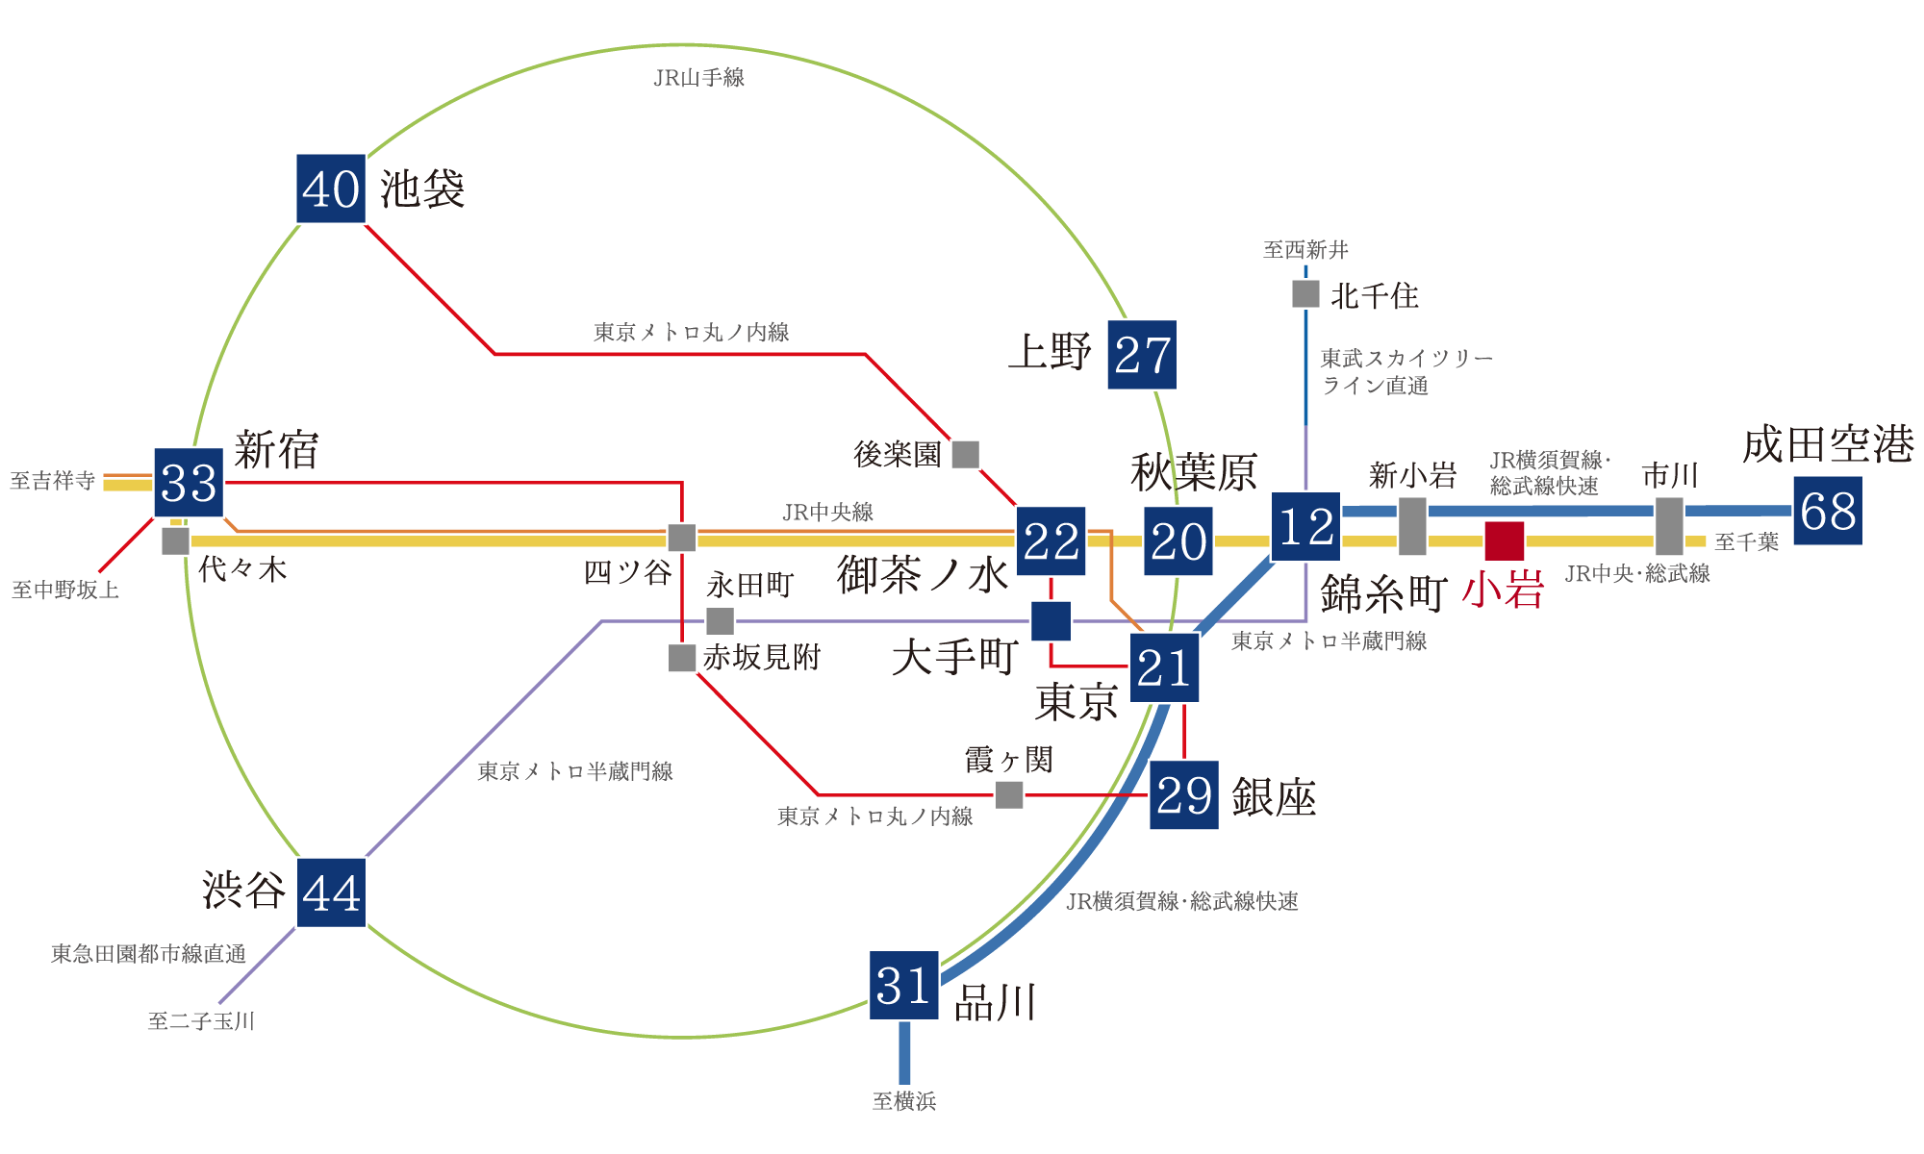 JR総武線の路線図